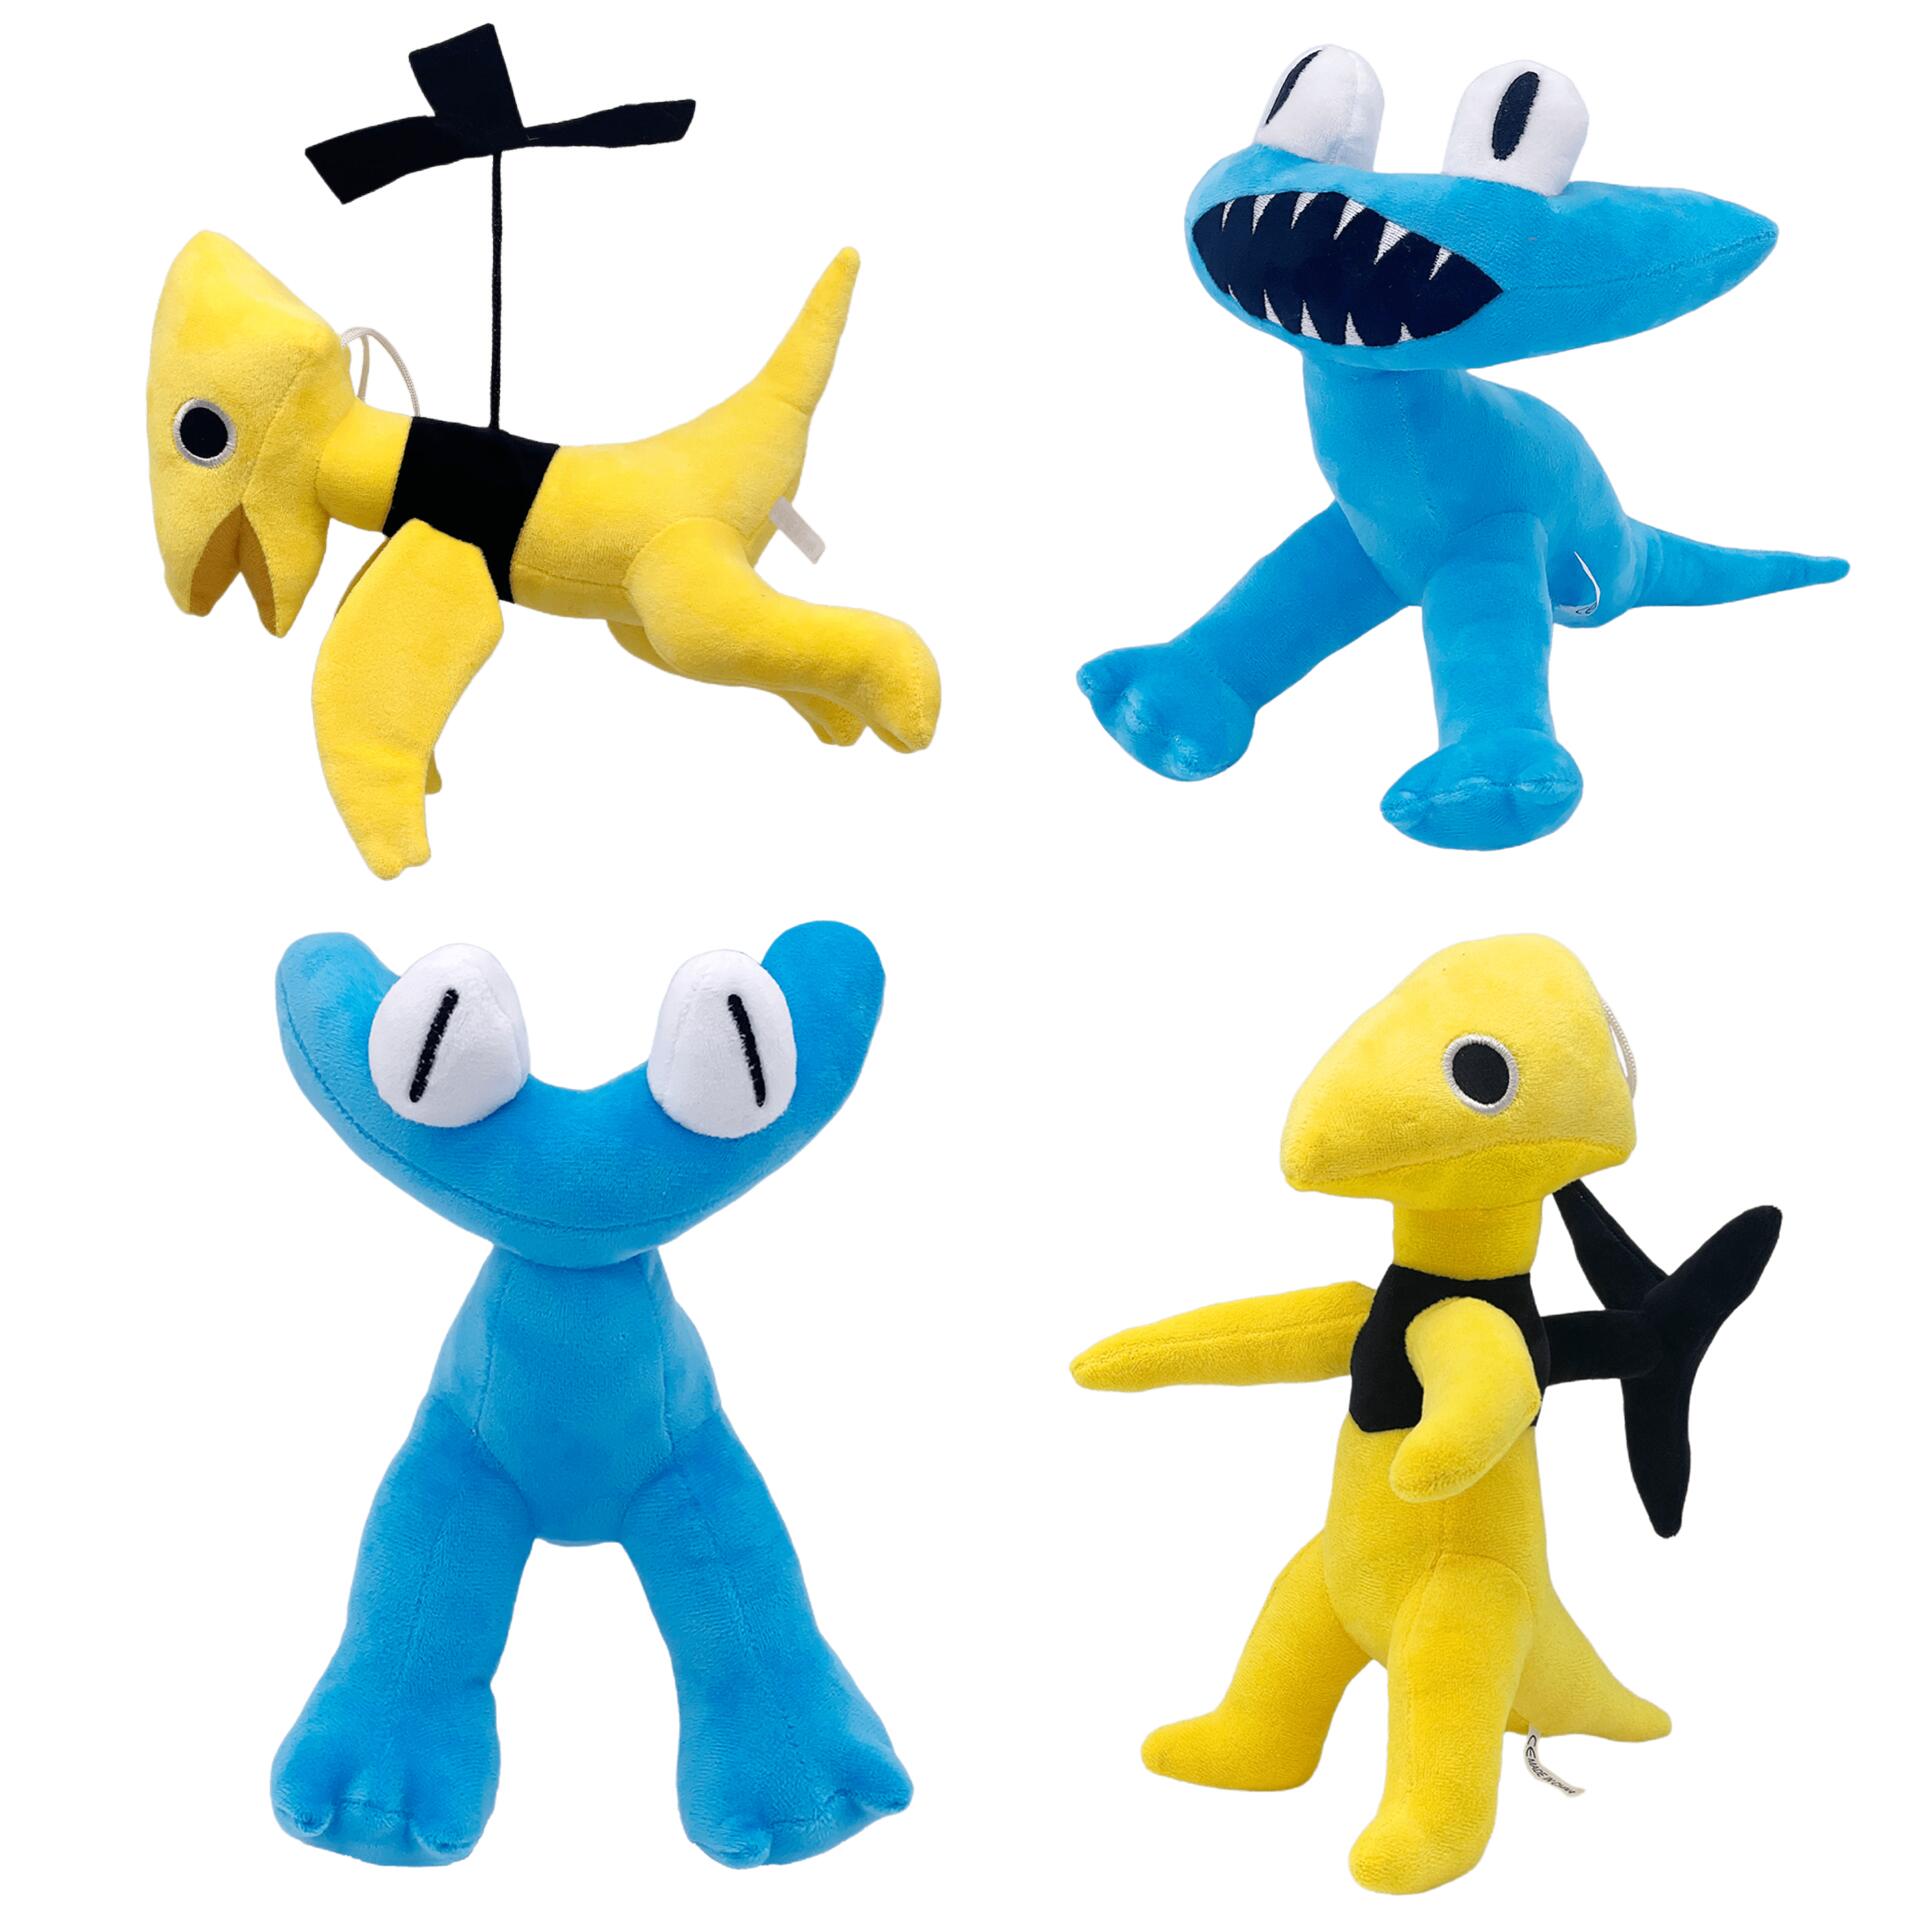 Rainbow Friends Chapter 2 Stuffed Plush Toys Cute Blue Monster